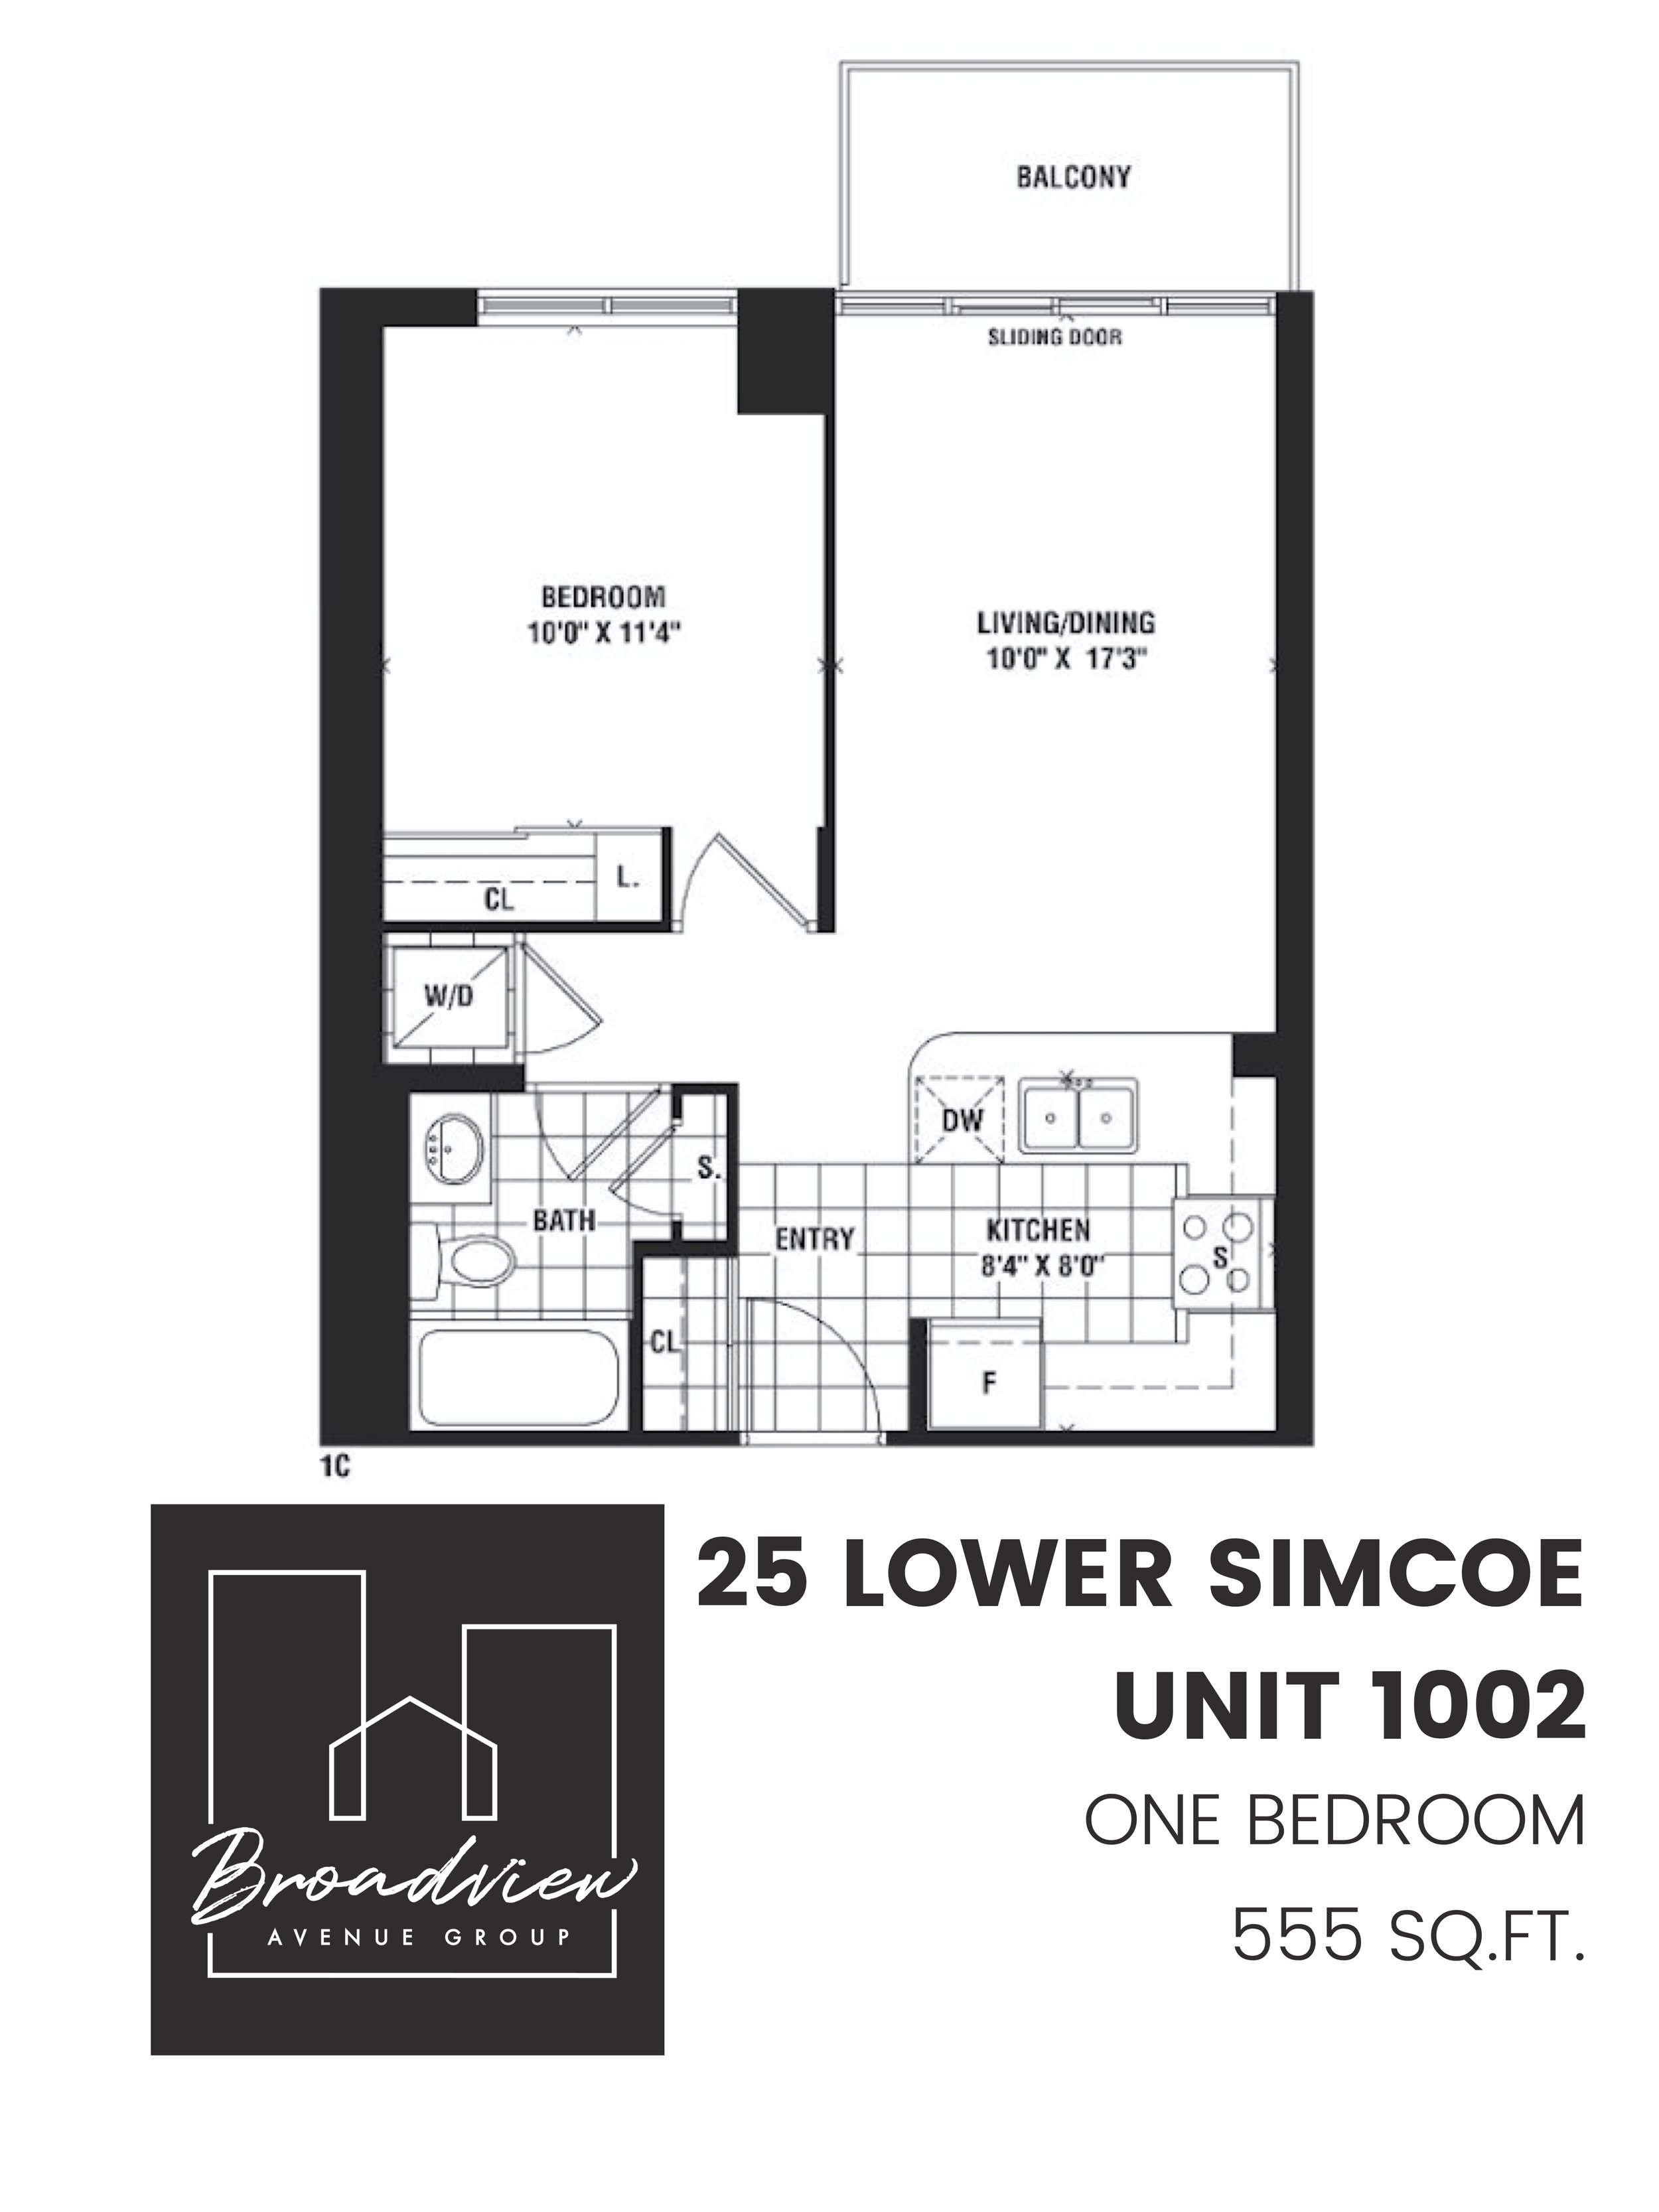 25 Lower Simcoe Unit 1002 - Floorplan.jpg